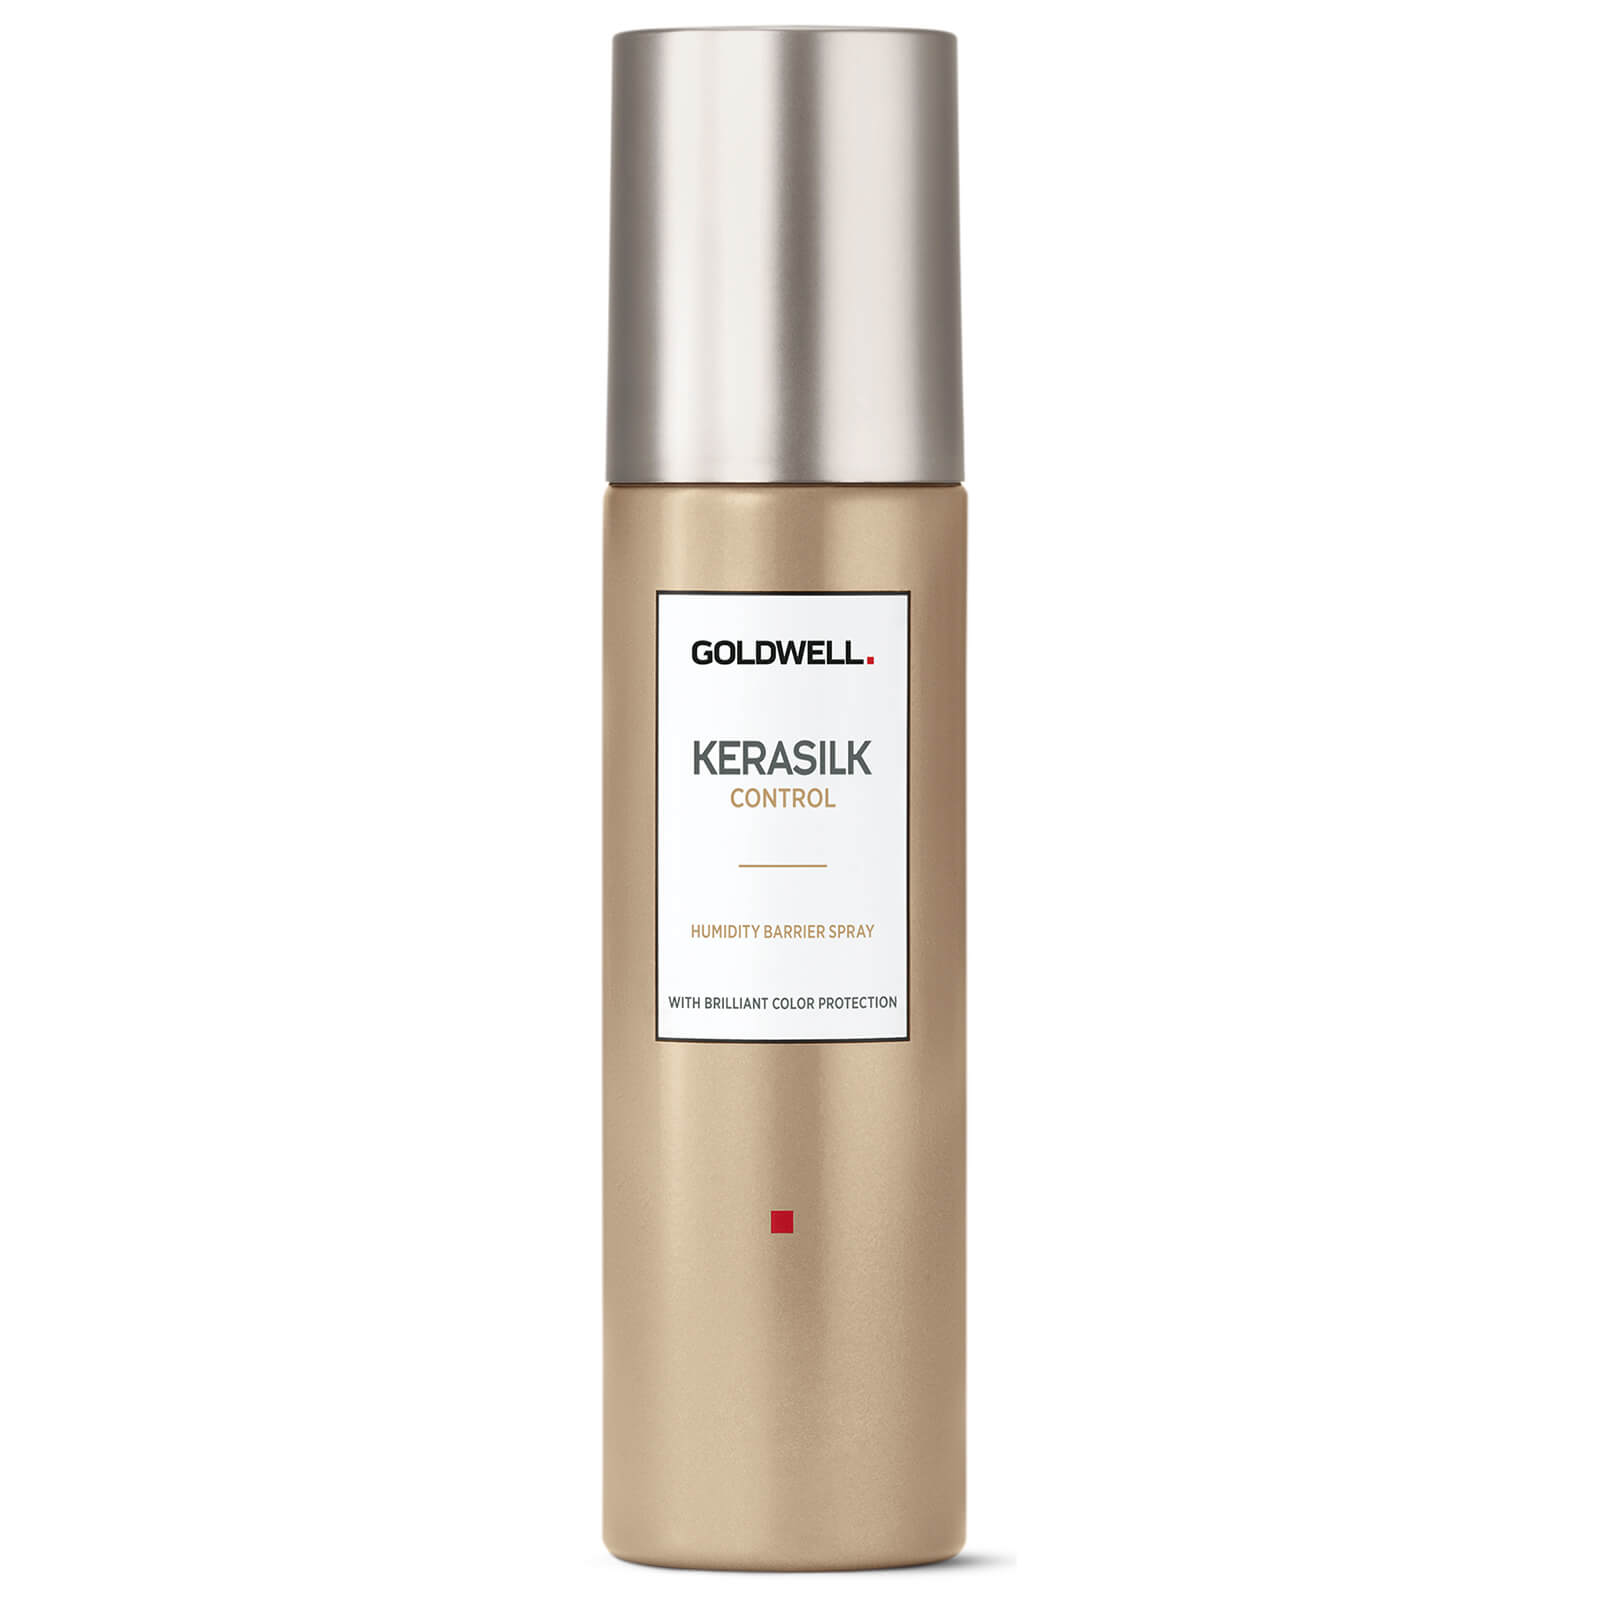 Goldwell Kerasilk Control Humidity Barrier Spray 150ml